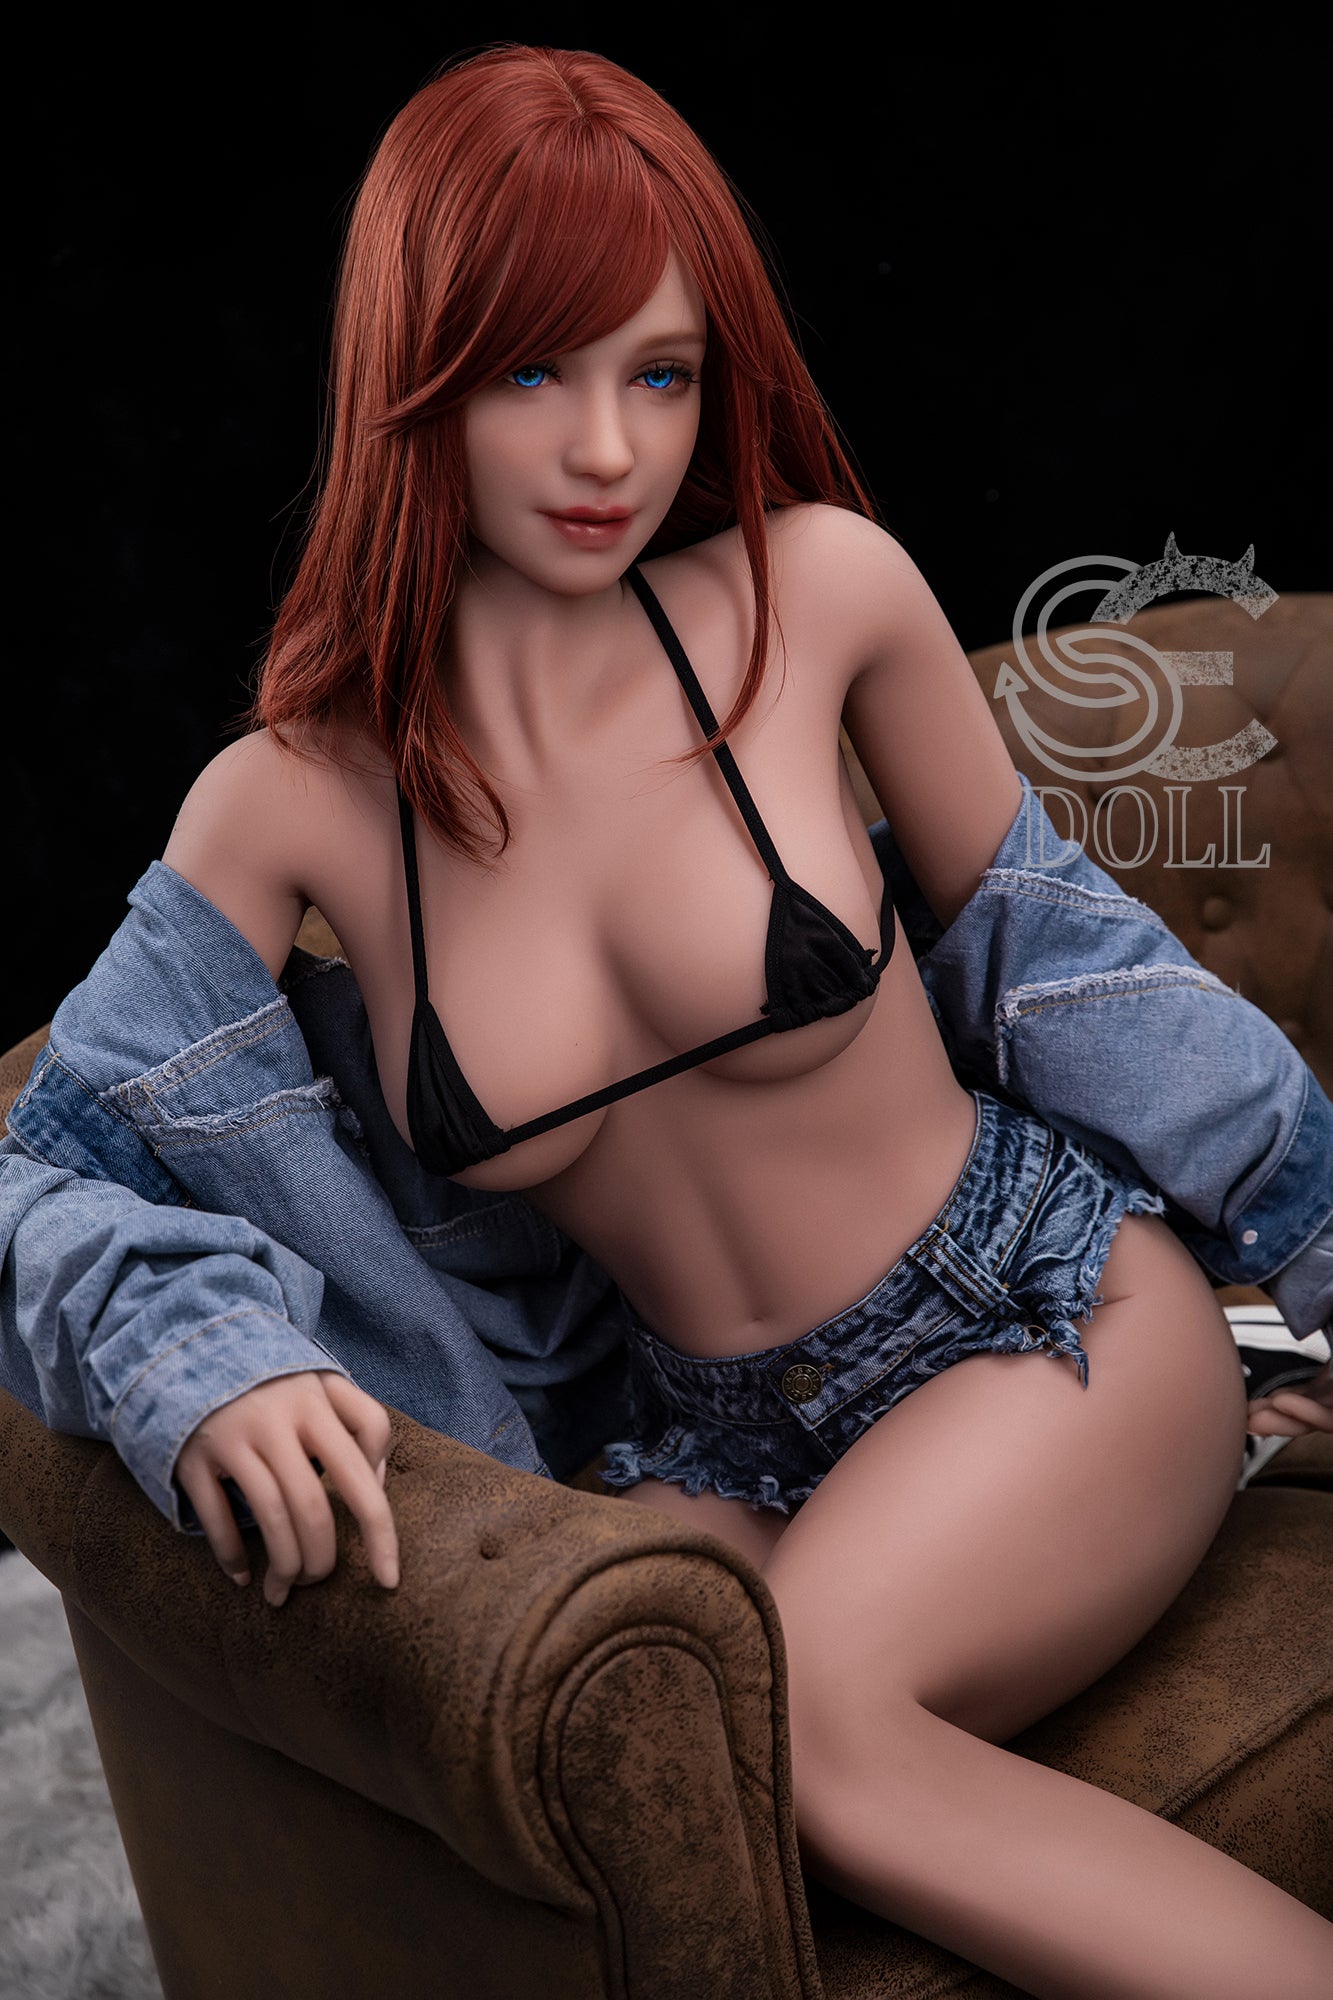 SEDOLL 163 cm E TPE - Carolyn | Buy Sex Dolls at DOLLS ACTUALLY